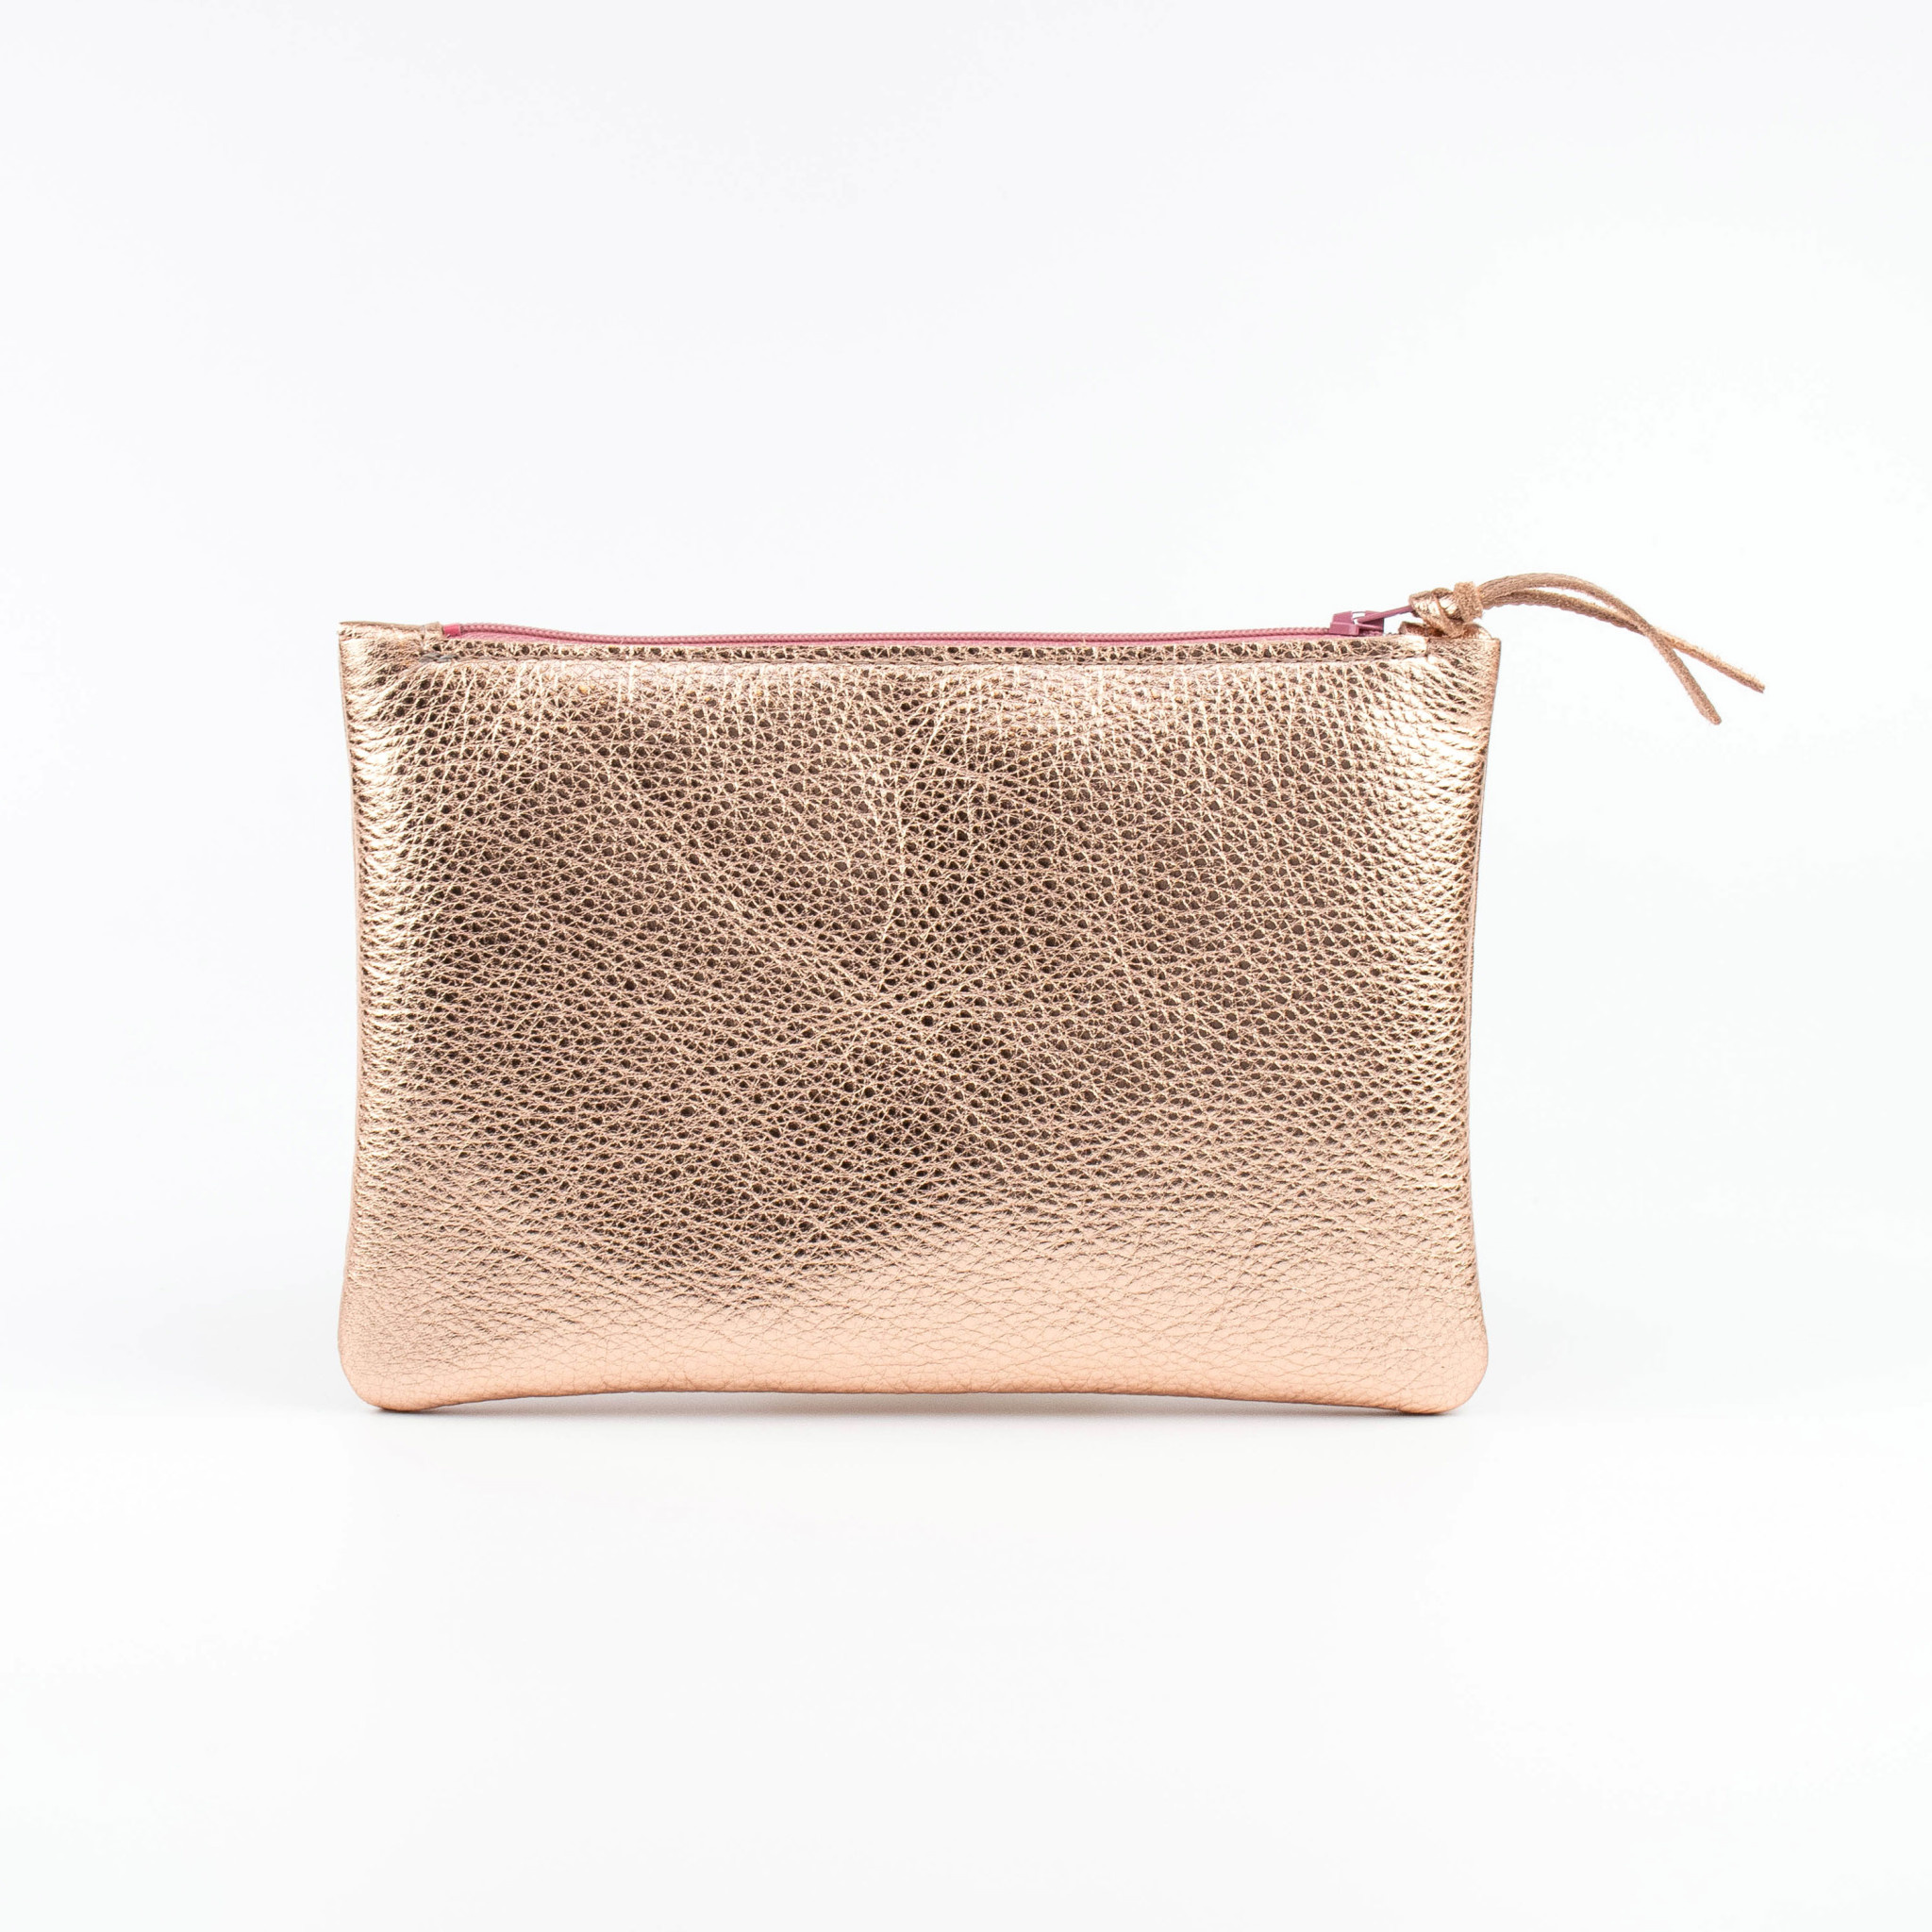 Guess | Bags | Guess Womens Dust Rose Gold Patent Tote Bag Handbag Purse |  Poshmark